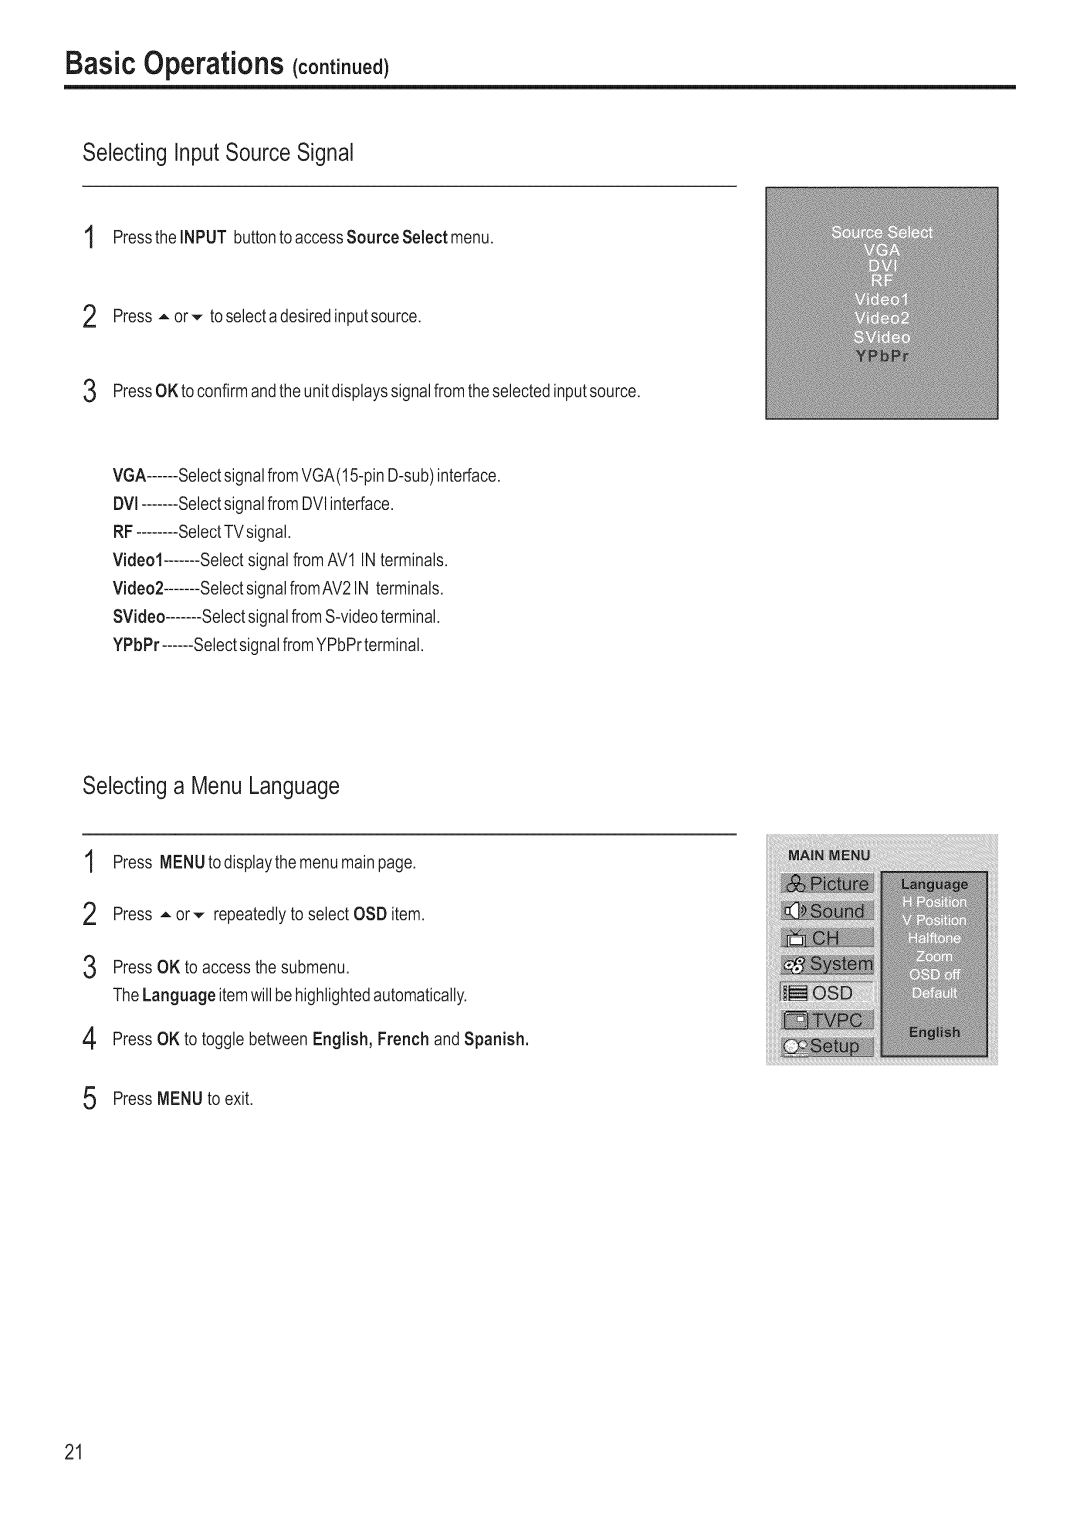 Polaroid FLM-3201 manual Basic Operations cootooe¢, Selecting InputSourceSignal, Selecting a MenuLanguage 